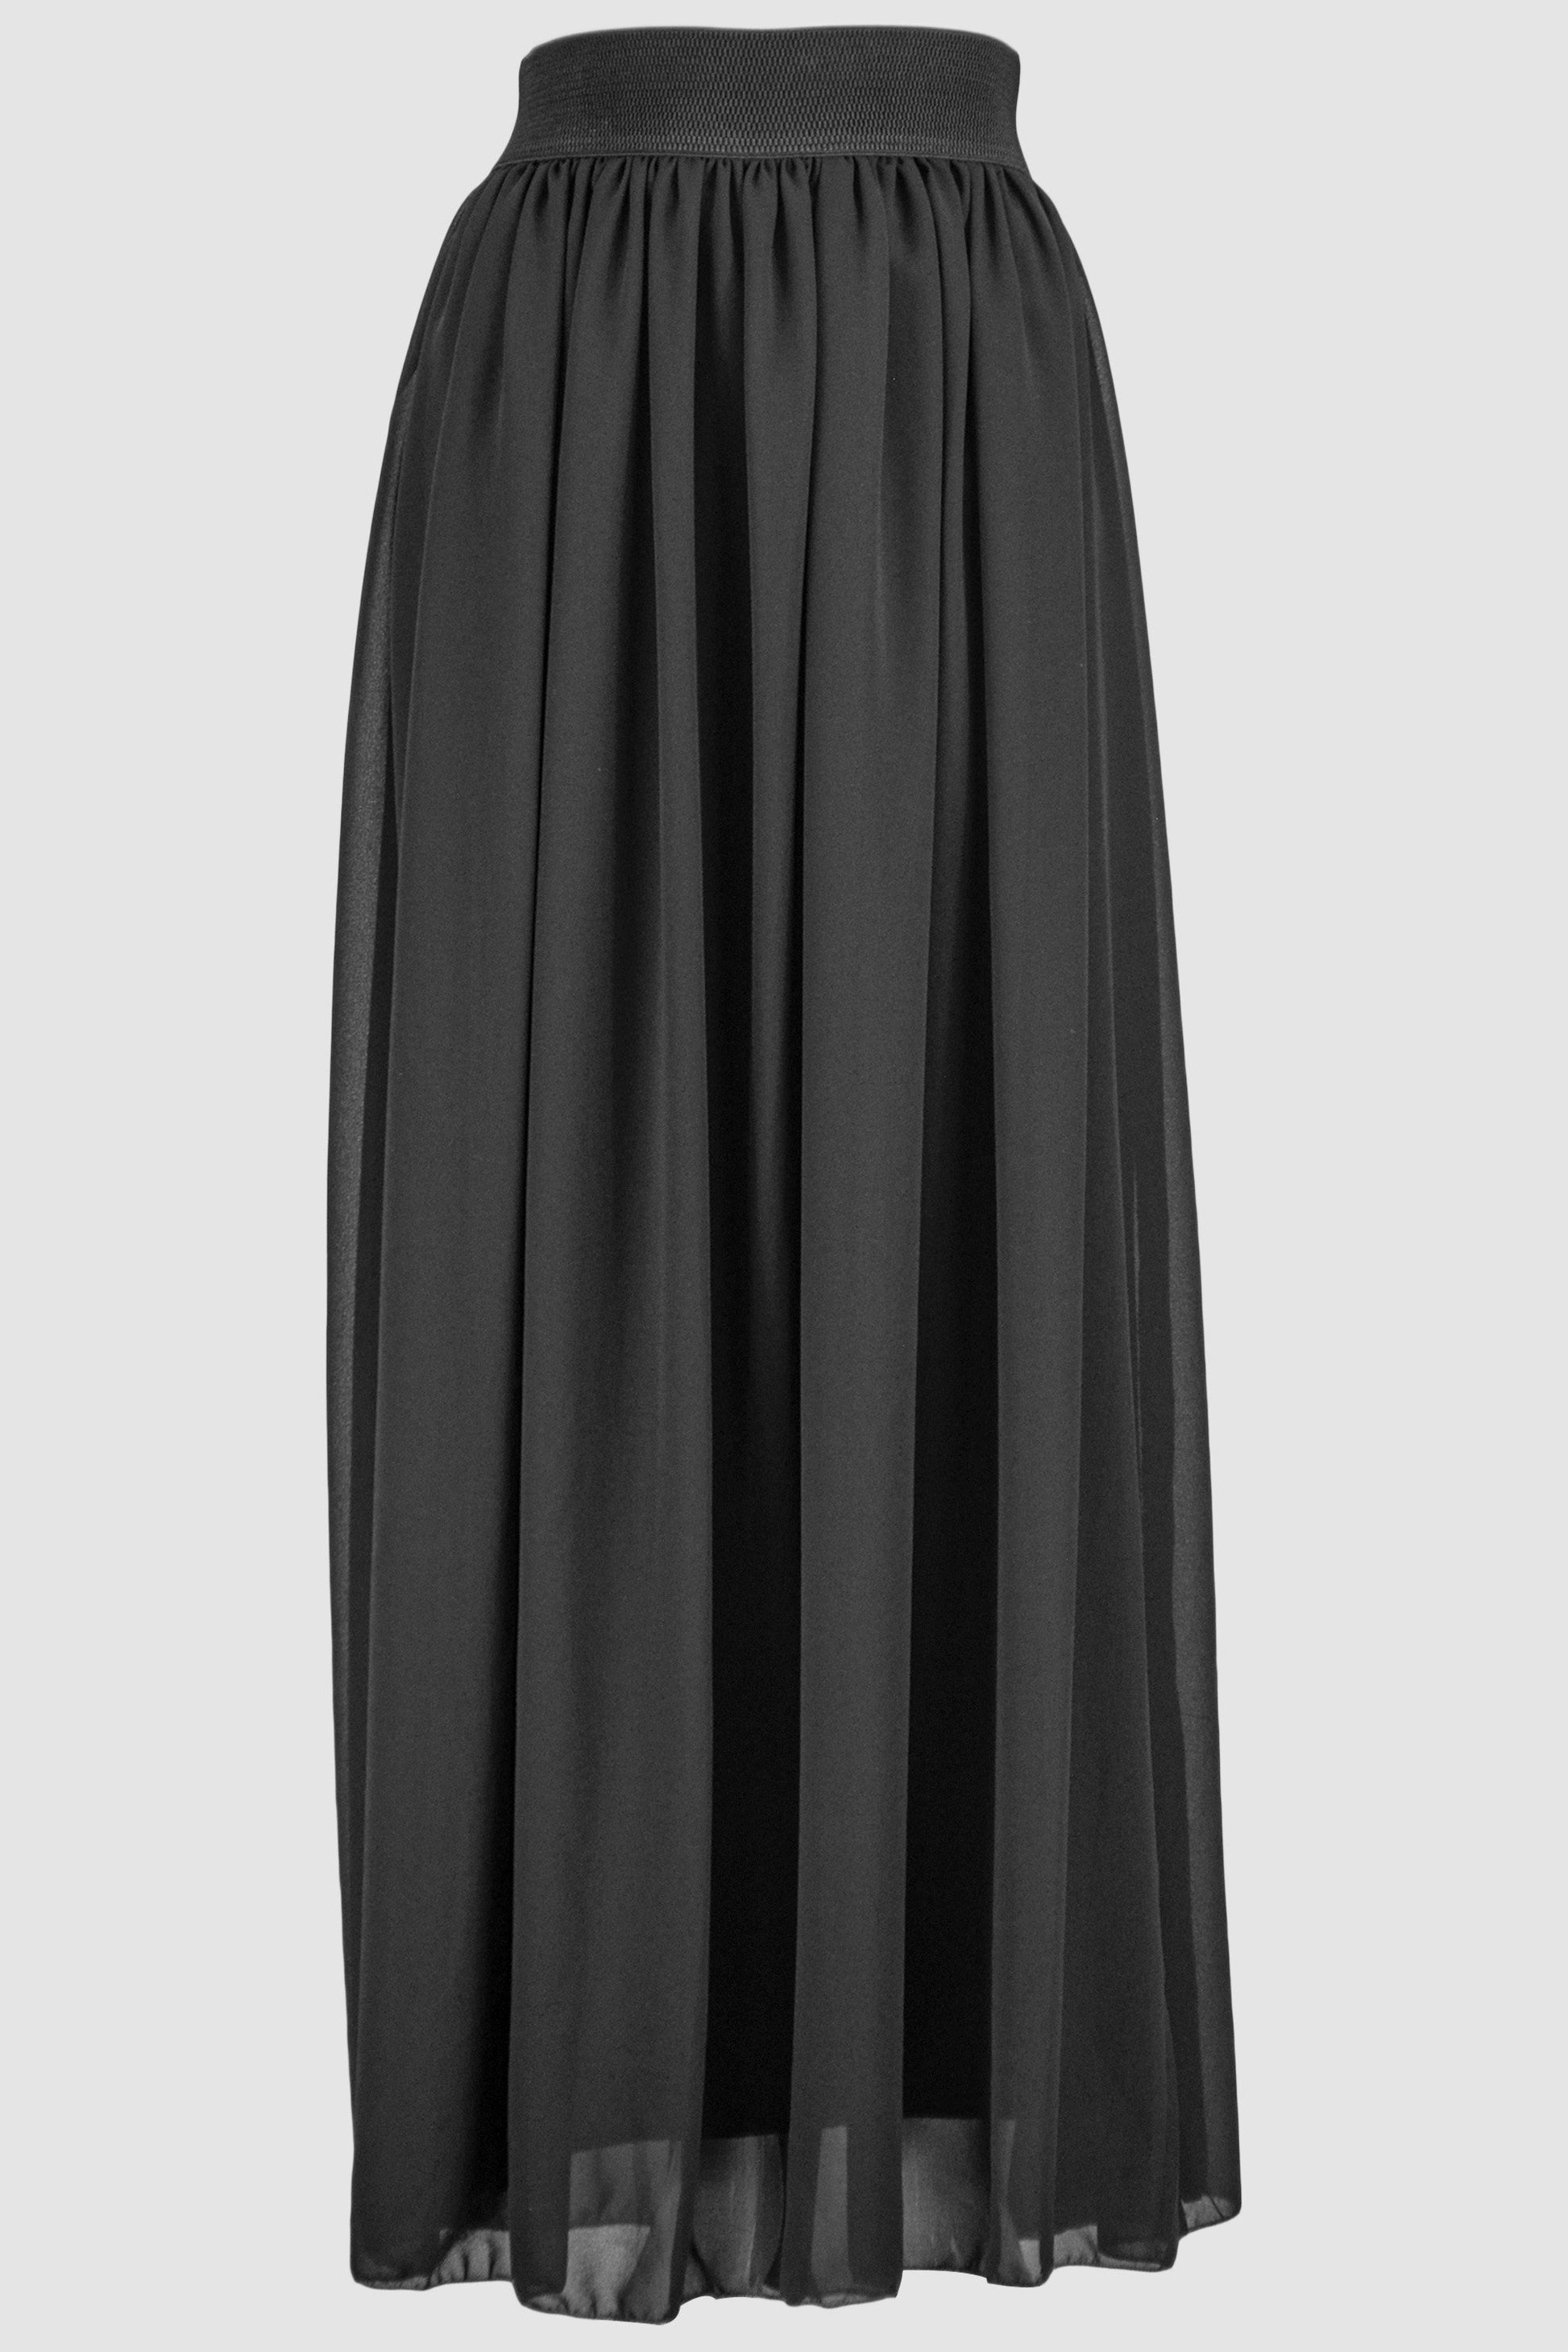 Black Chiffon Flared Skirt With Inner Layer-almanaar Islamic Store